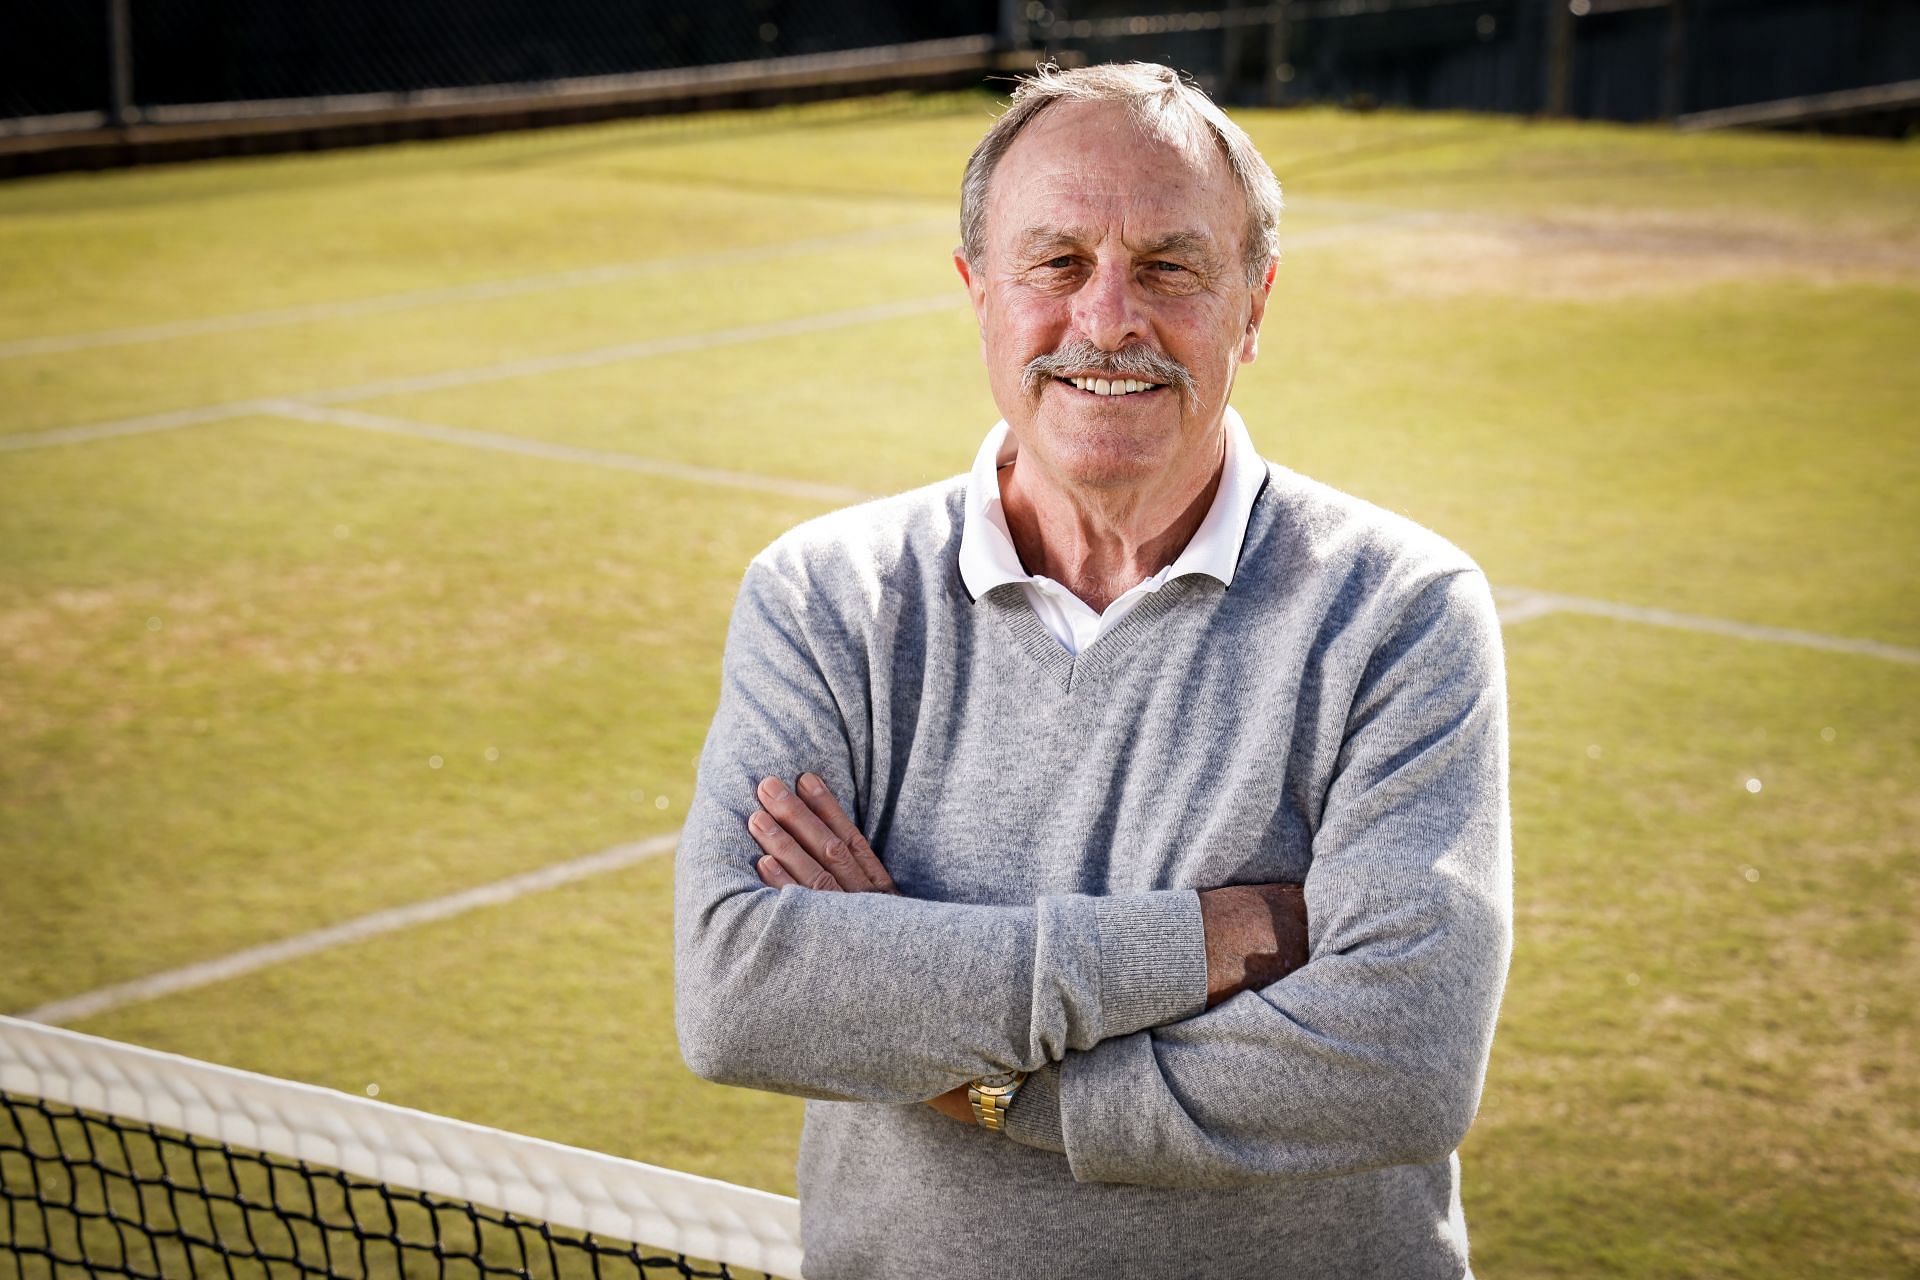 John Newcombe won 17 doubles Slams over his illustrious career